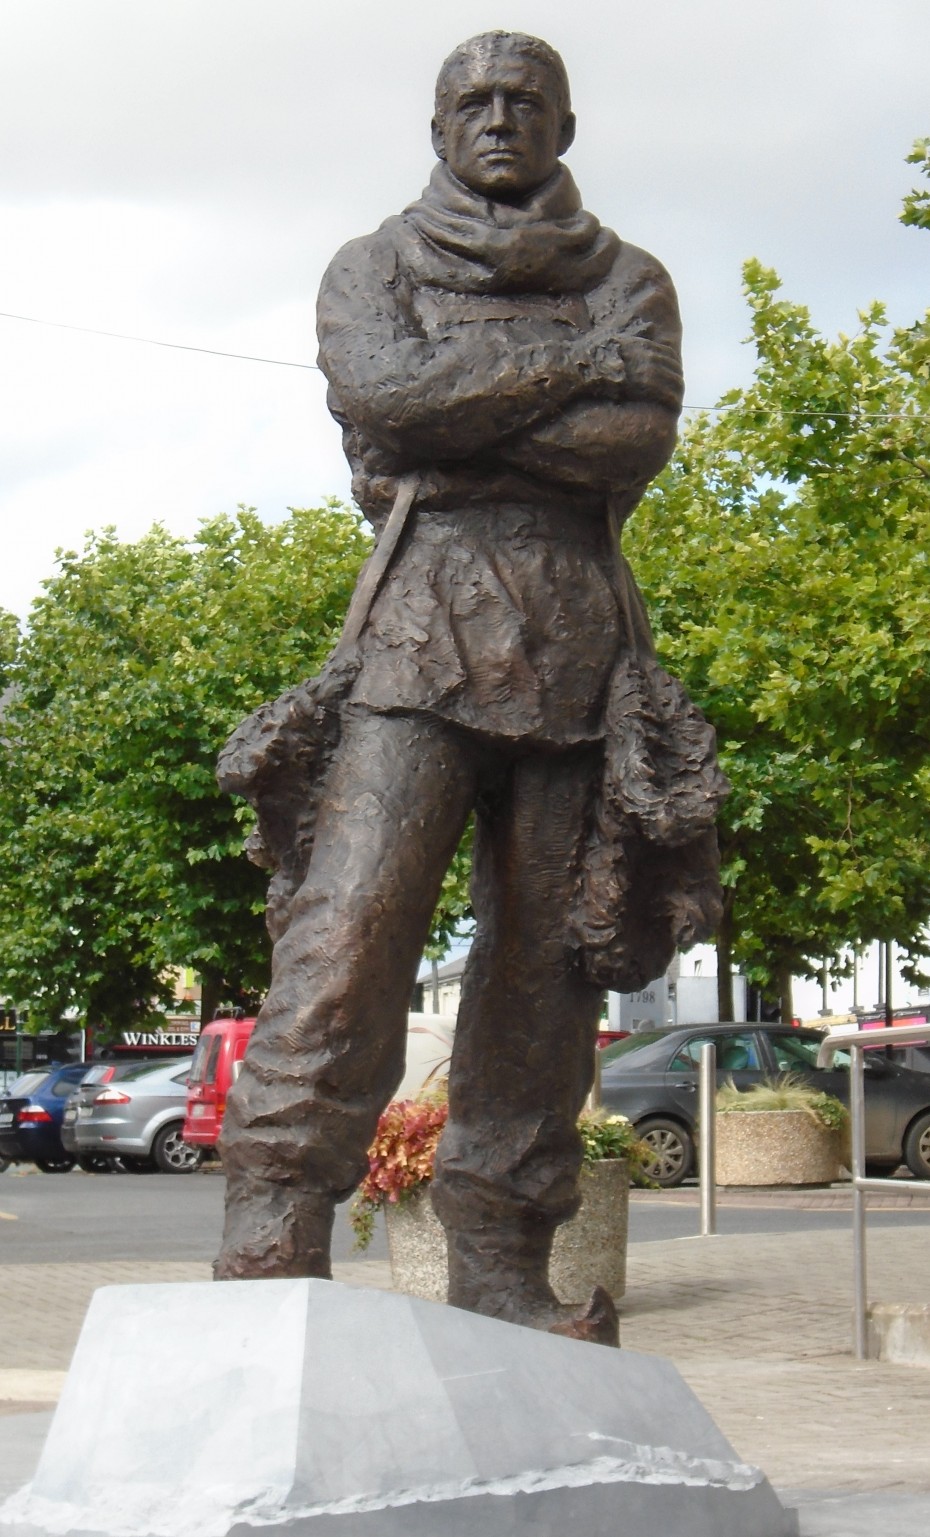 Mark Richards's Shackleton statue